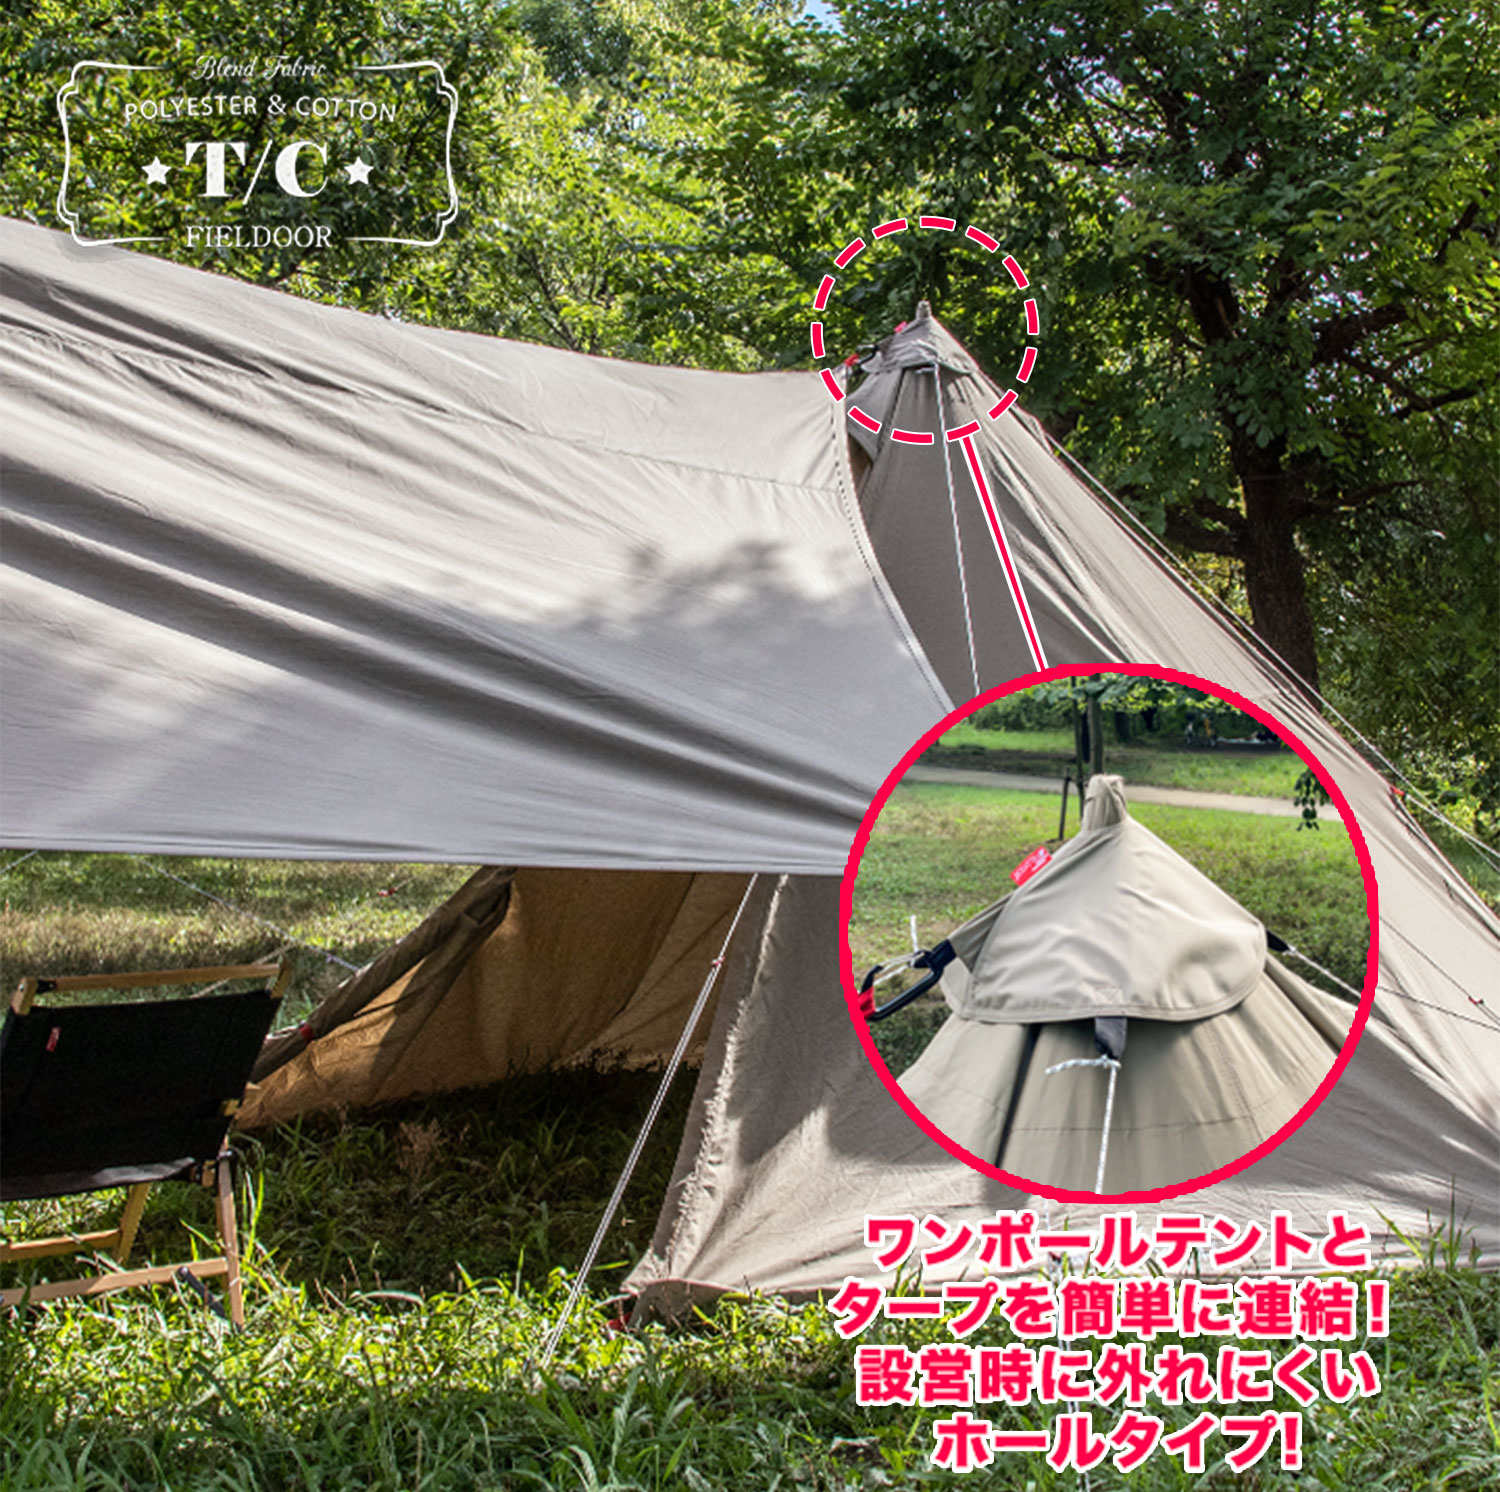 FIELDOOR ワンポールテント タープテント - テント/タープ